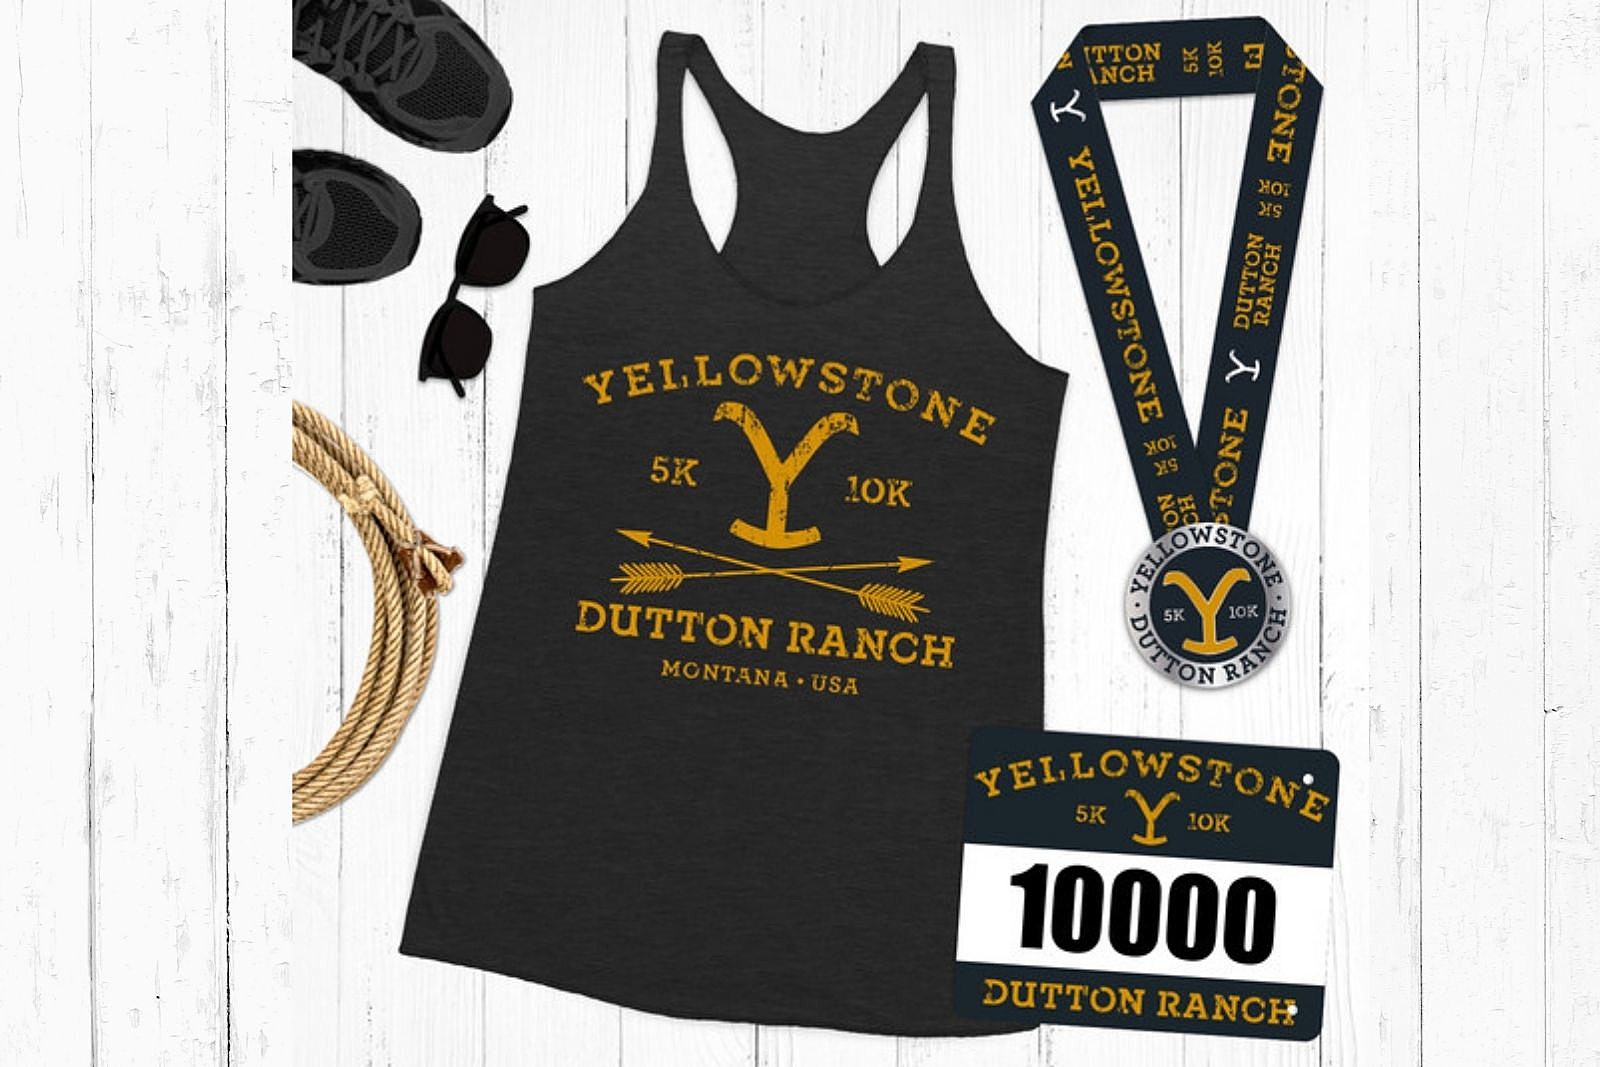 Yellowstone Dutton Ranch Cheetah Custom Made Beverage Koozie